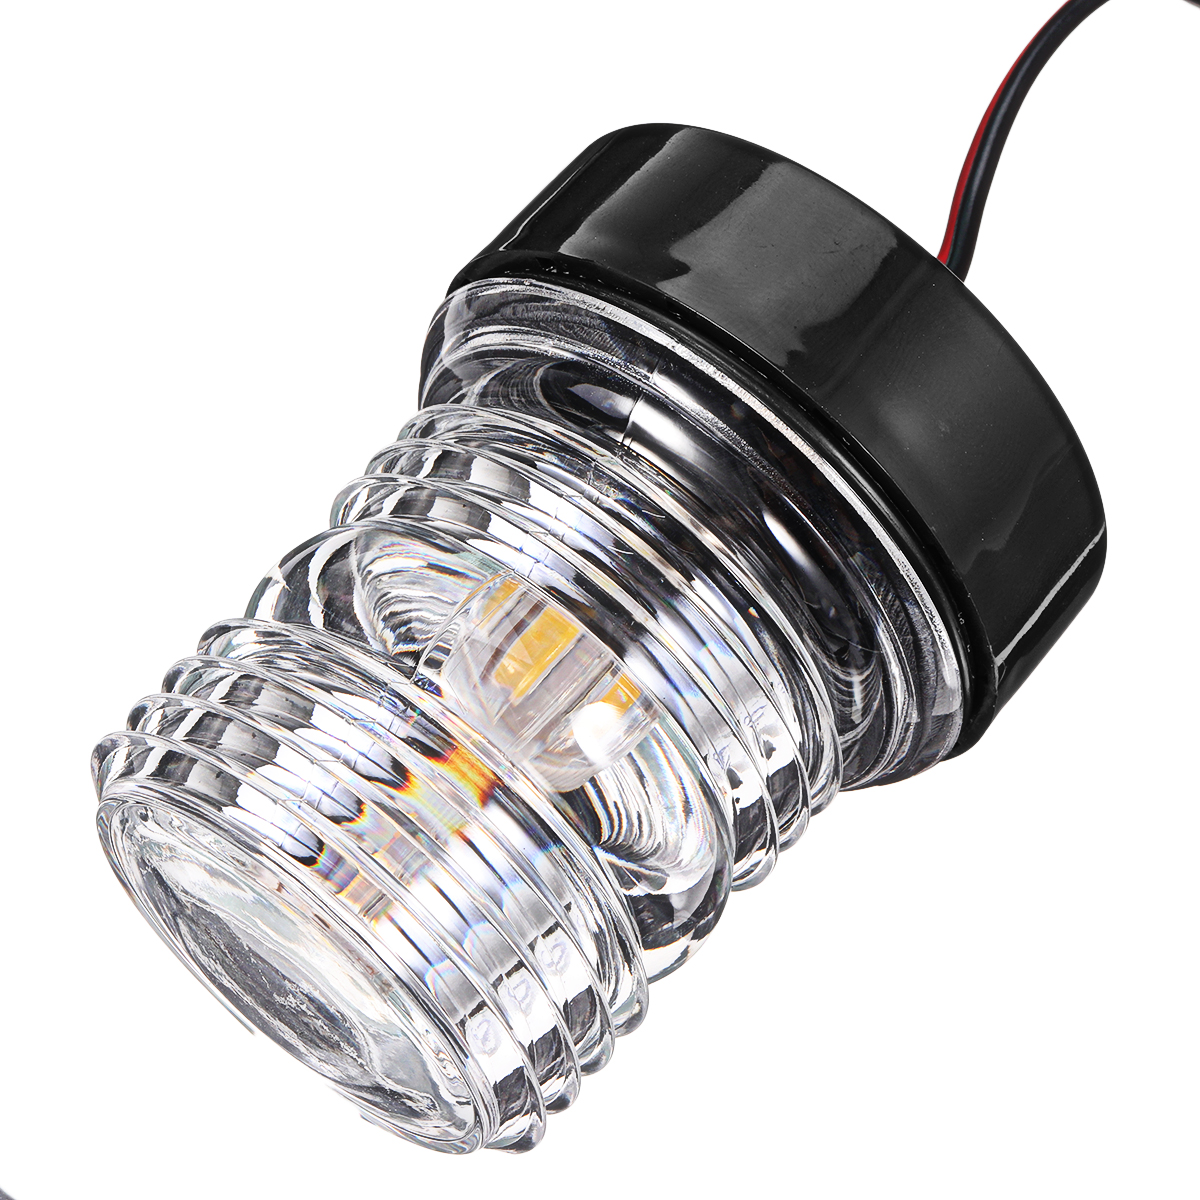 360° LED Light Signal Lamp Navigation Light for Car/Truck/Boat/Trailer/Van